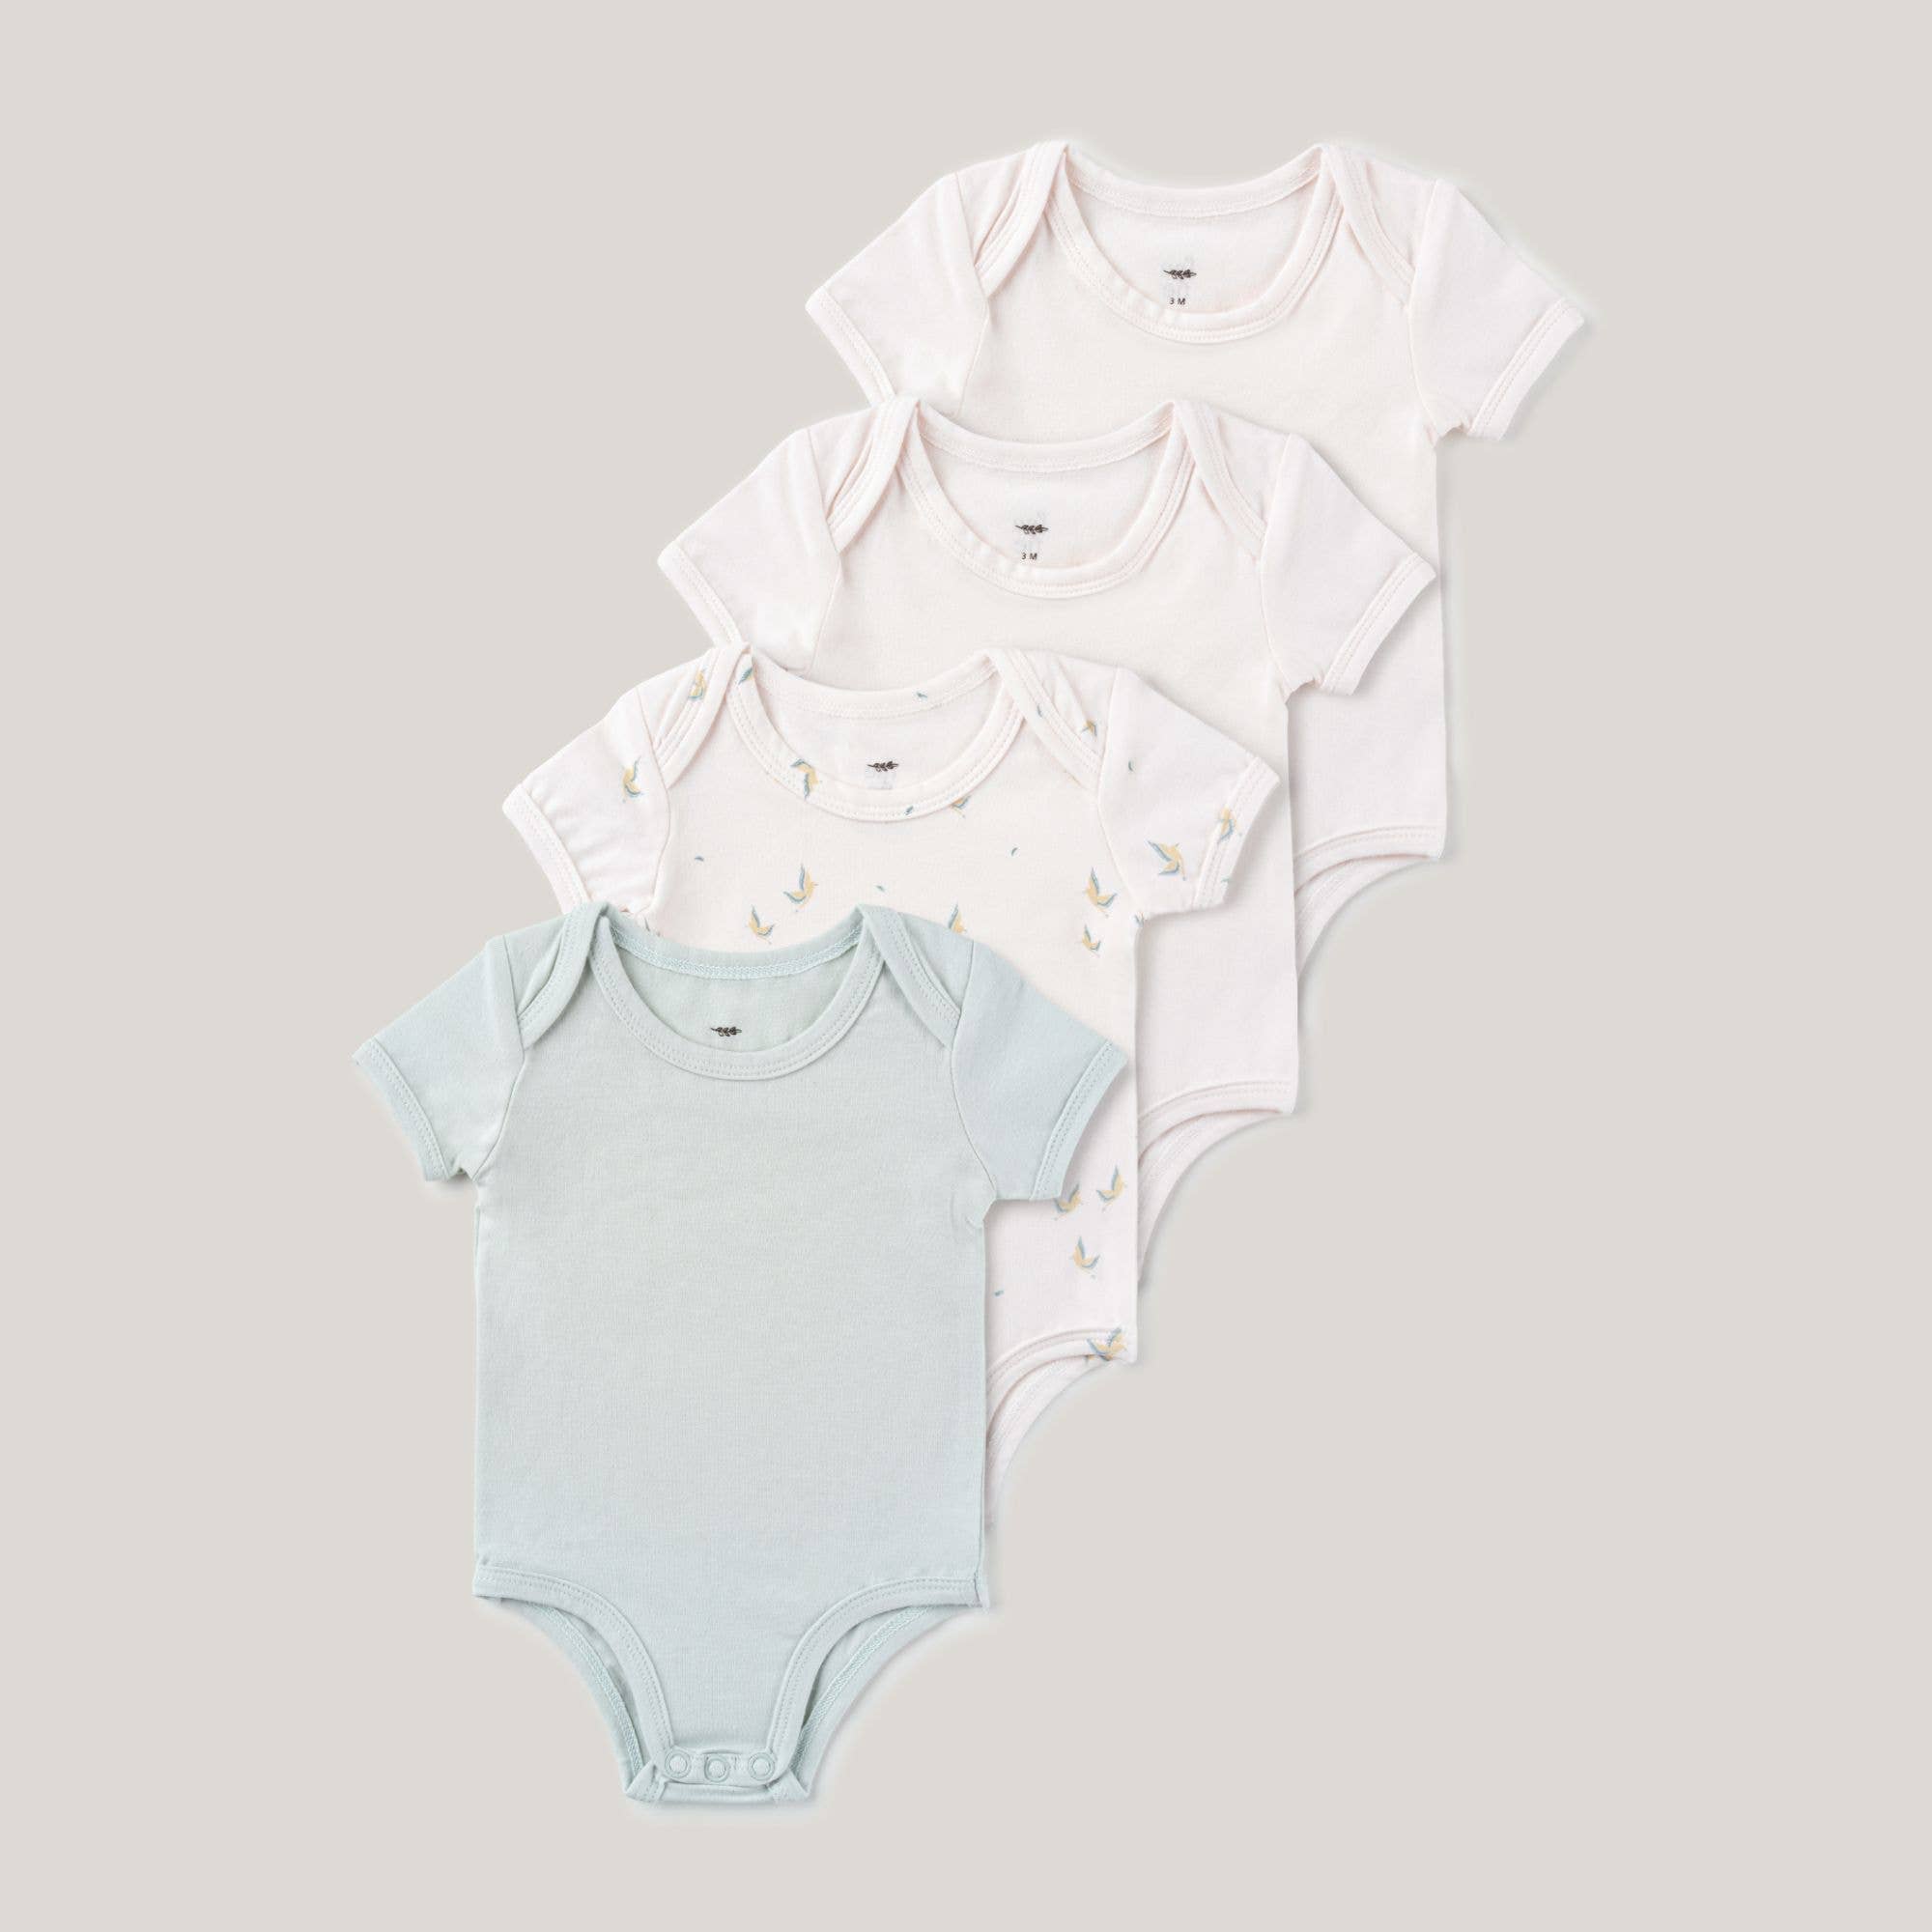 Baby Boy Short Sleeve Undershirts 4 Pack